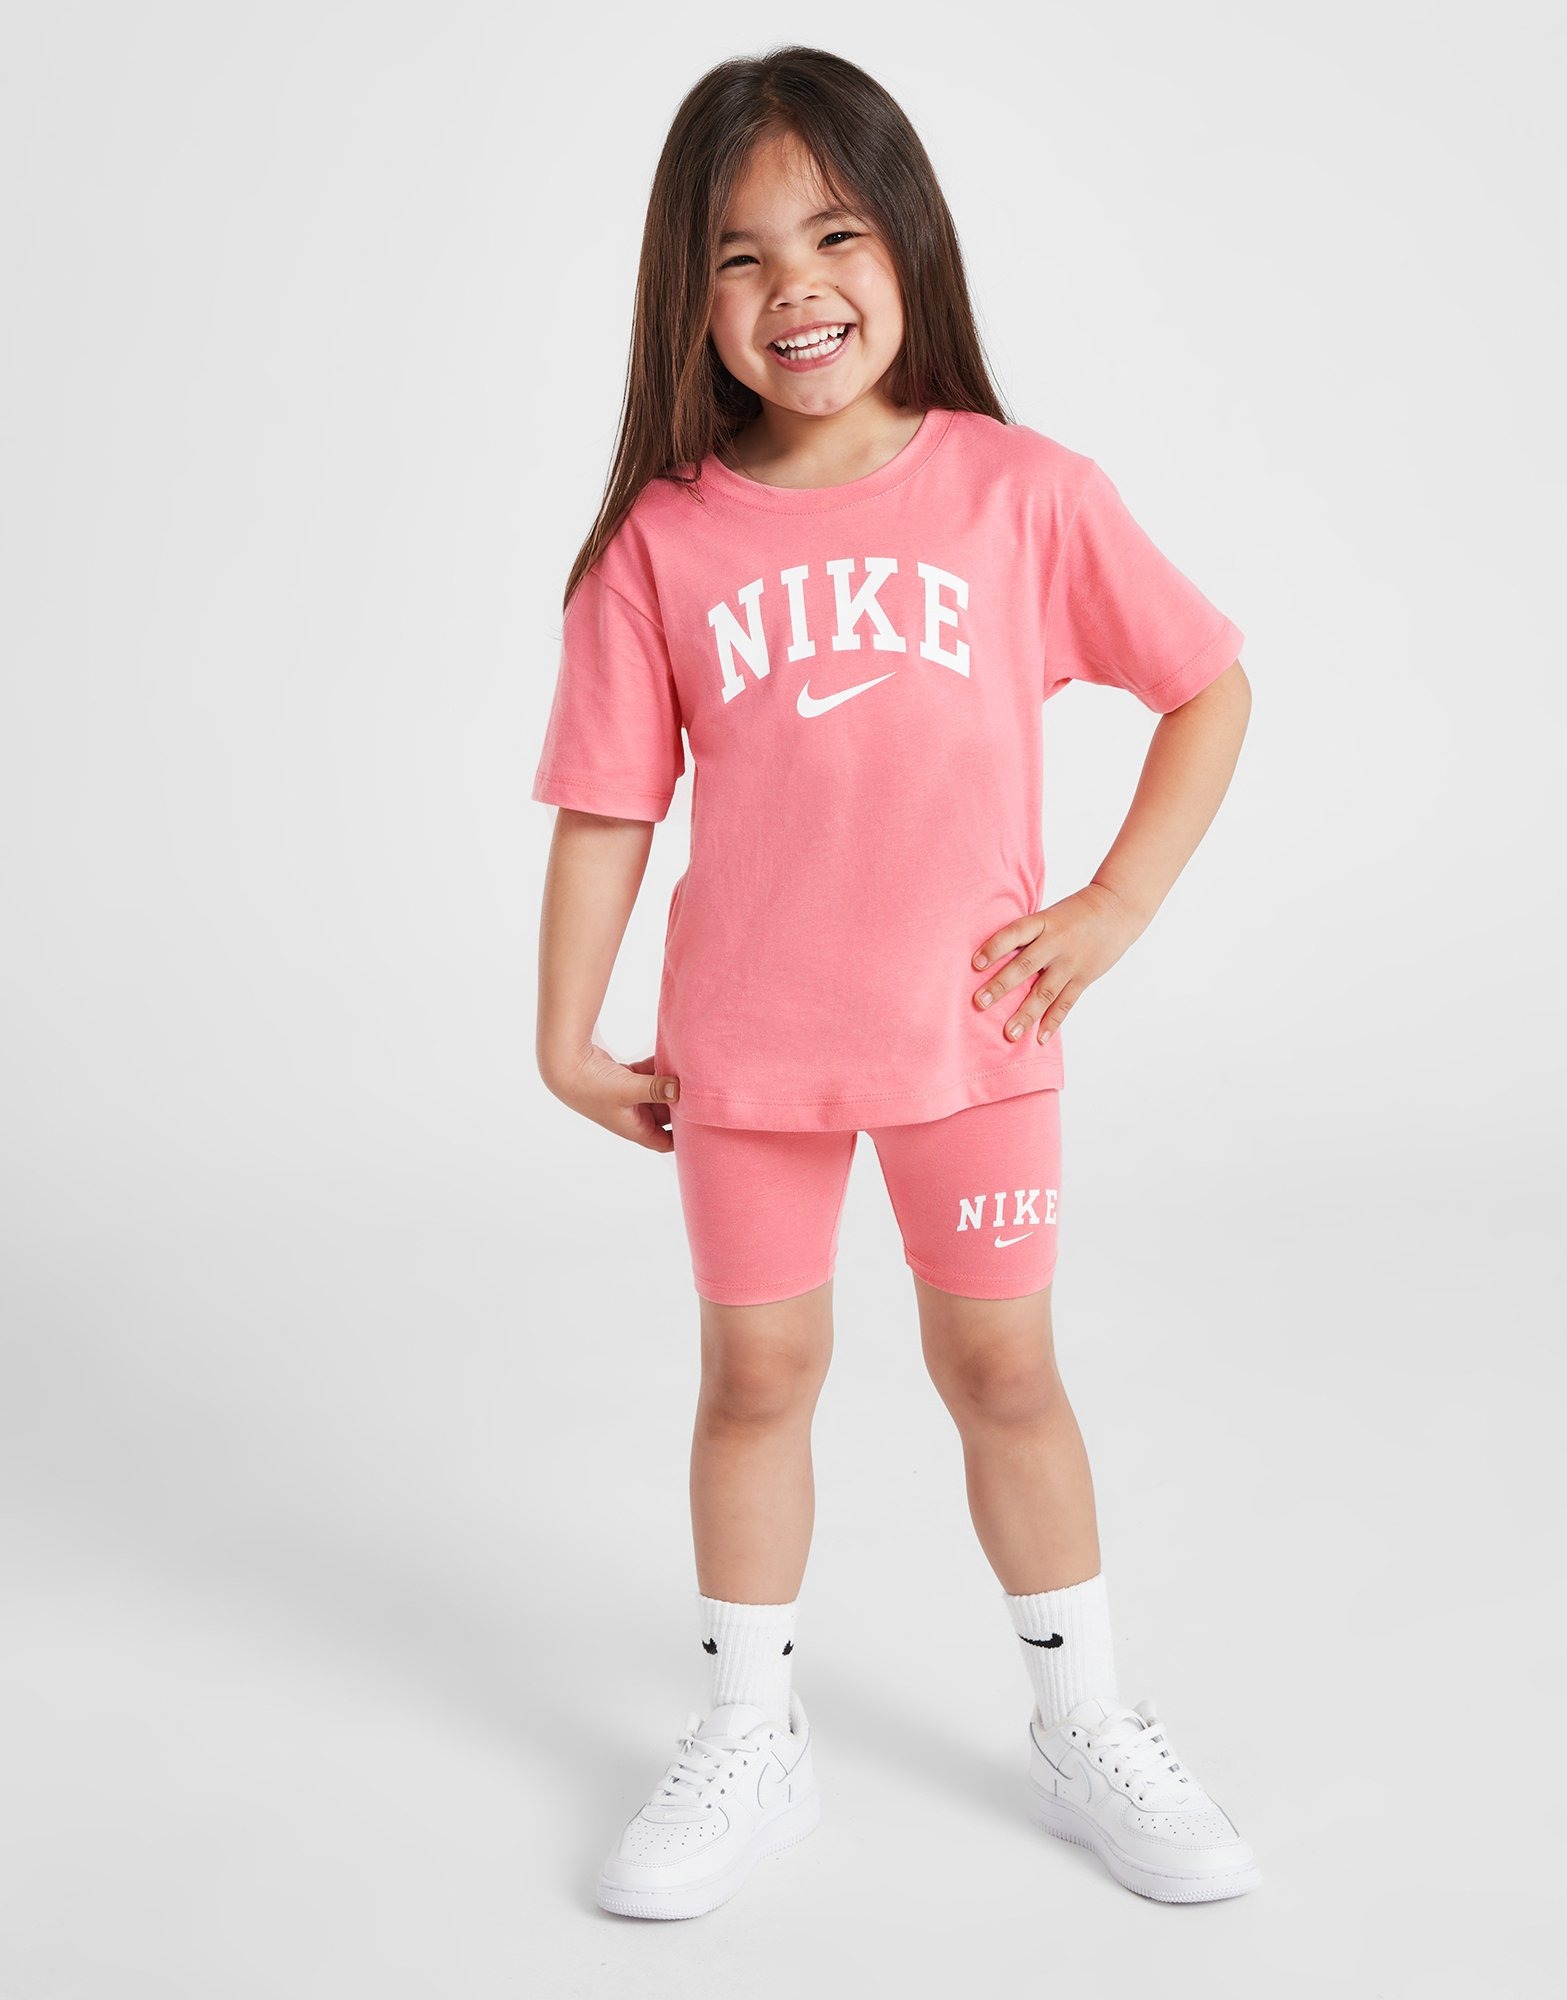 Nike T-Shirt/Shorts Set Children's - JD Sports